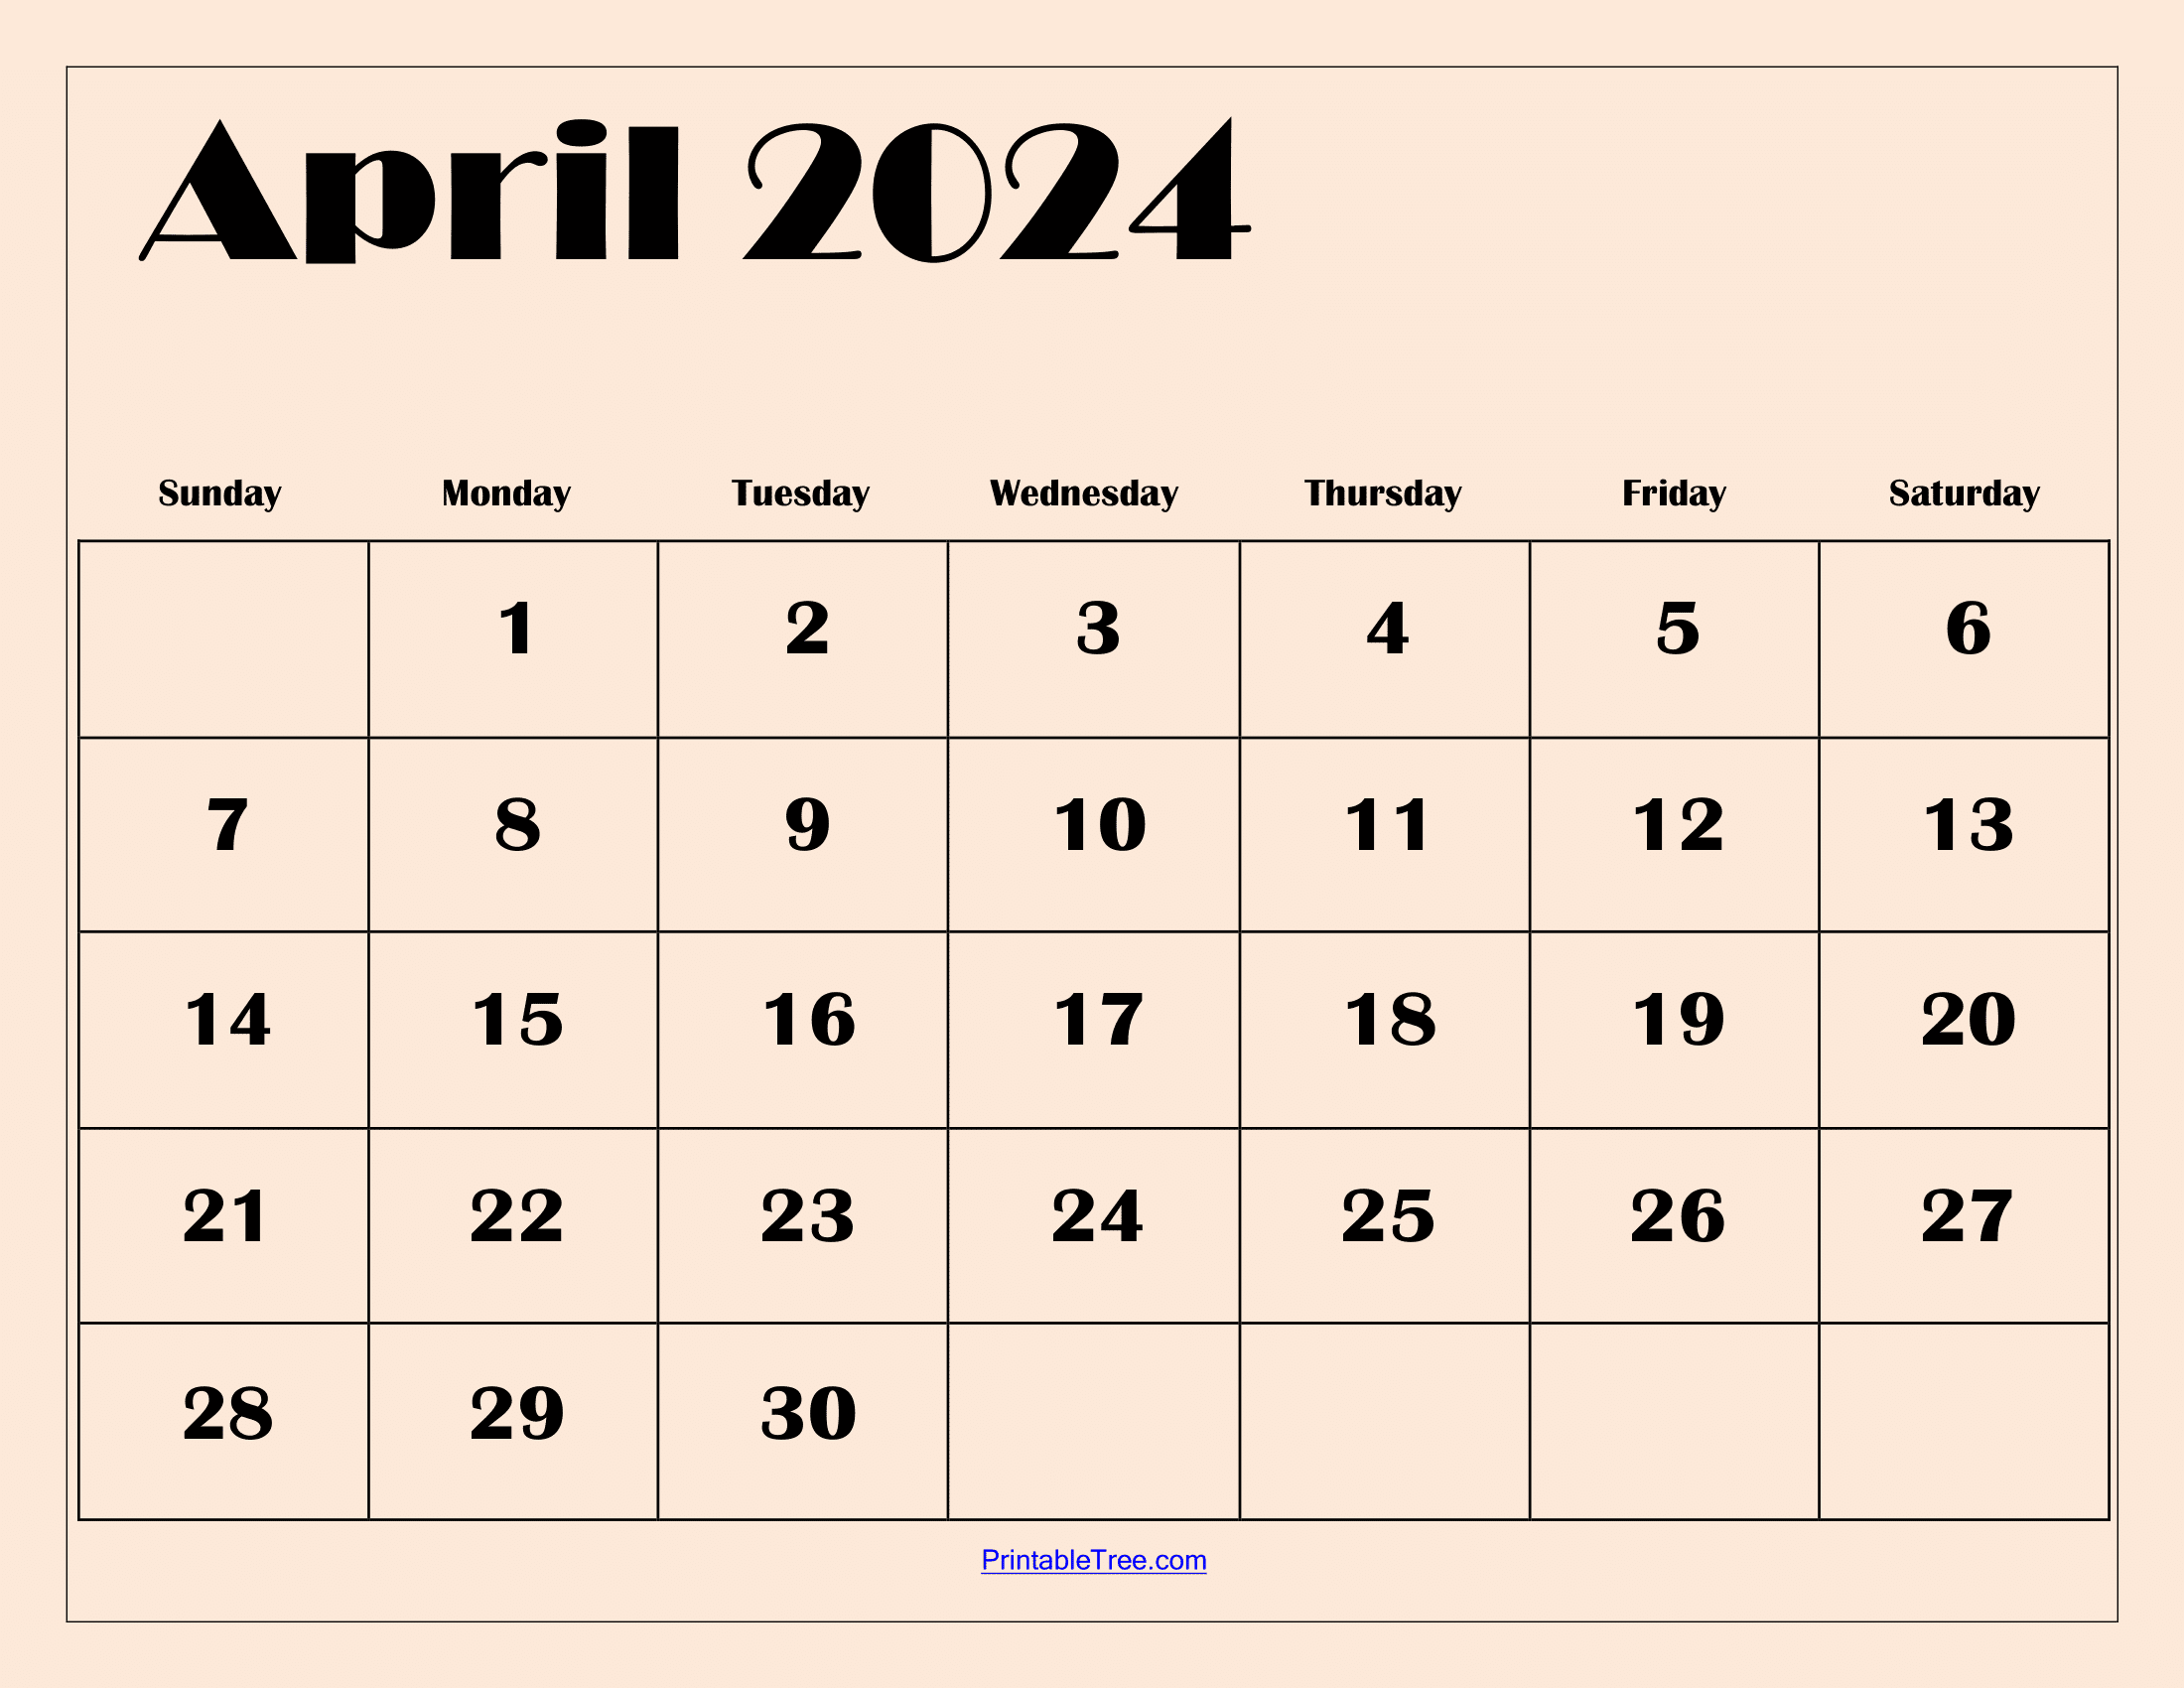 Blank April 2024 Calendar Printable Pdf Template With Holidays with regard to Free Printable April 2024 Calendar Amazing Designs